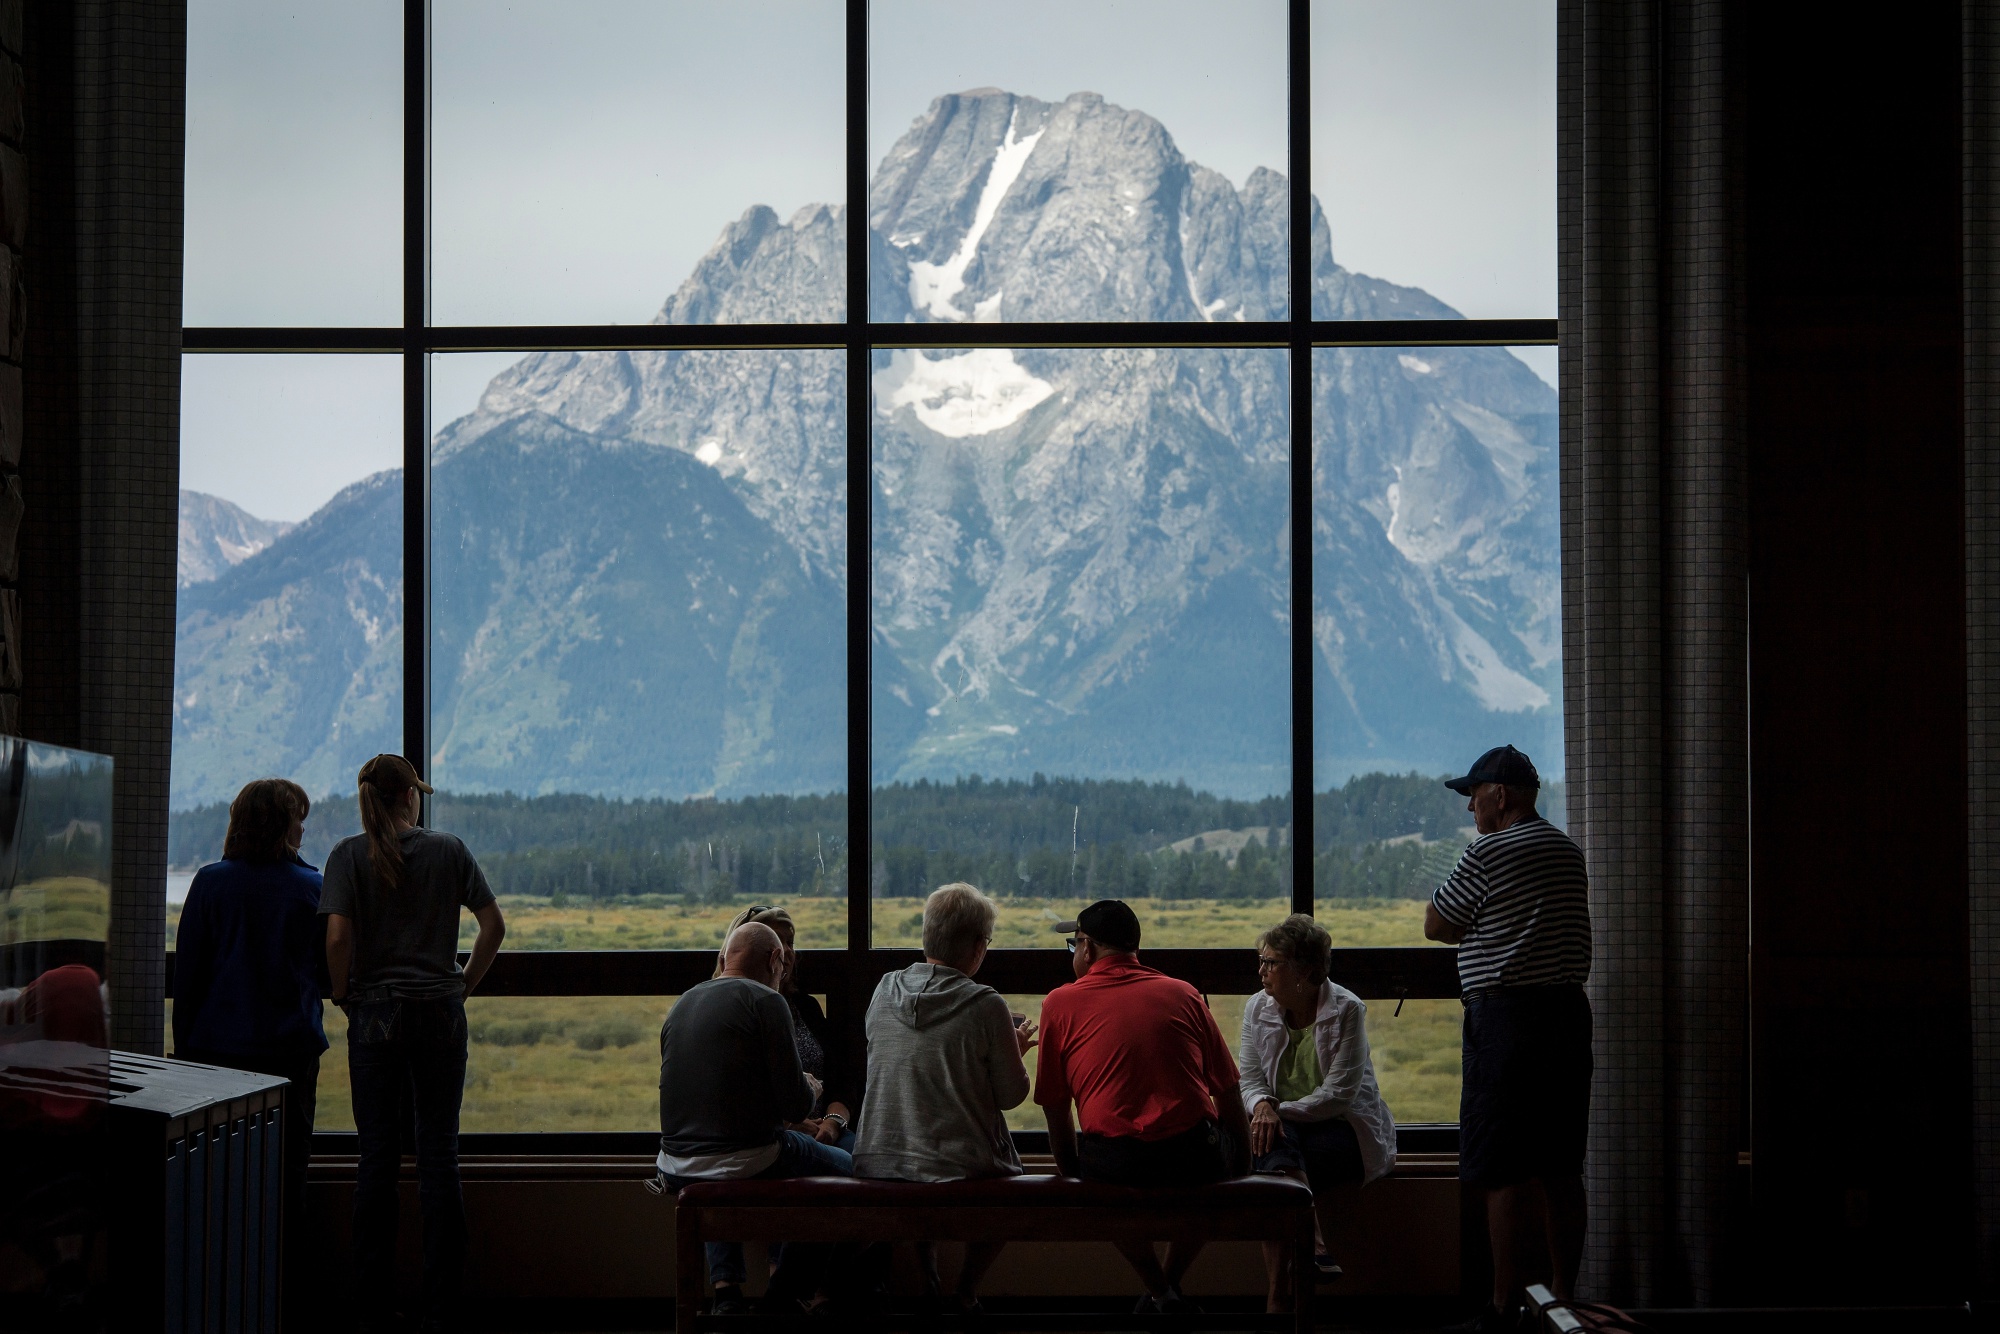 Visitors view the Grand Teton National Park mountain range from the Jackson Lake Lodge in Moran, Wyoming, U.S.